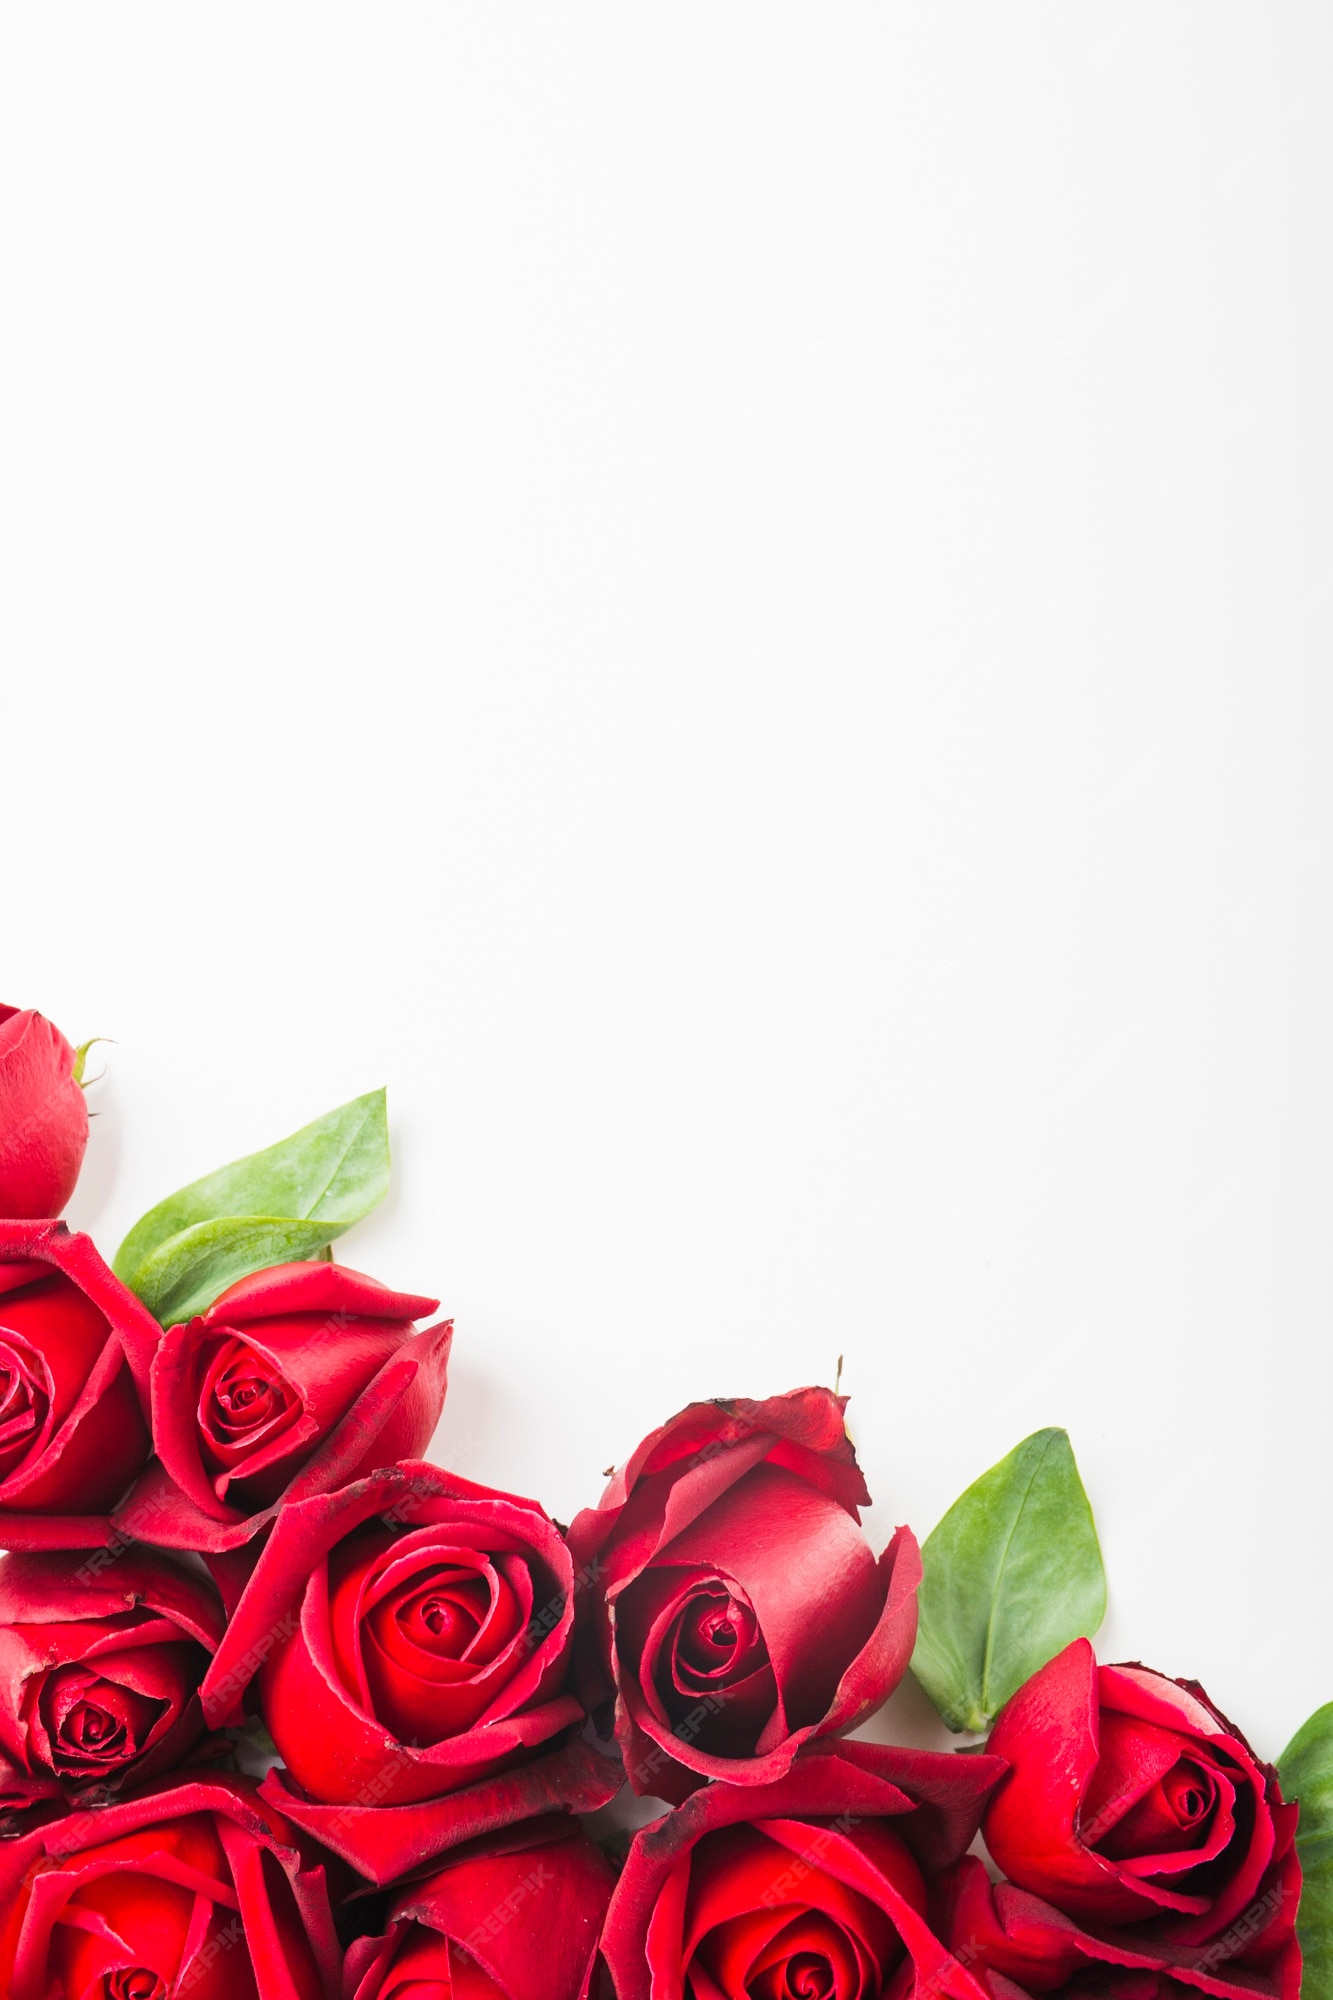 Free Photo | Rose decoration at the bottom of white background